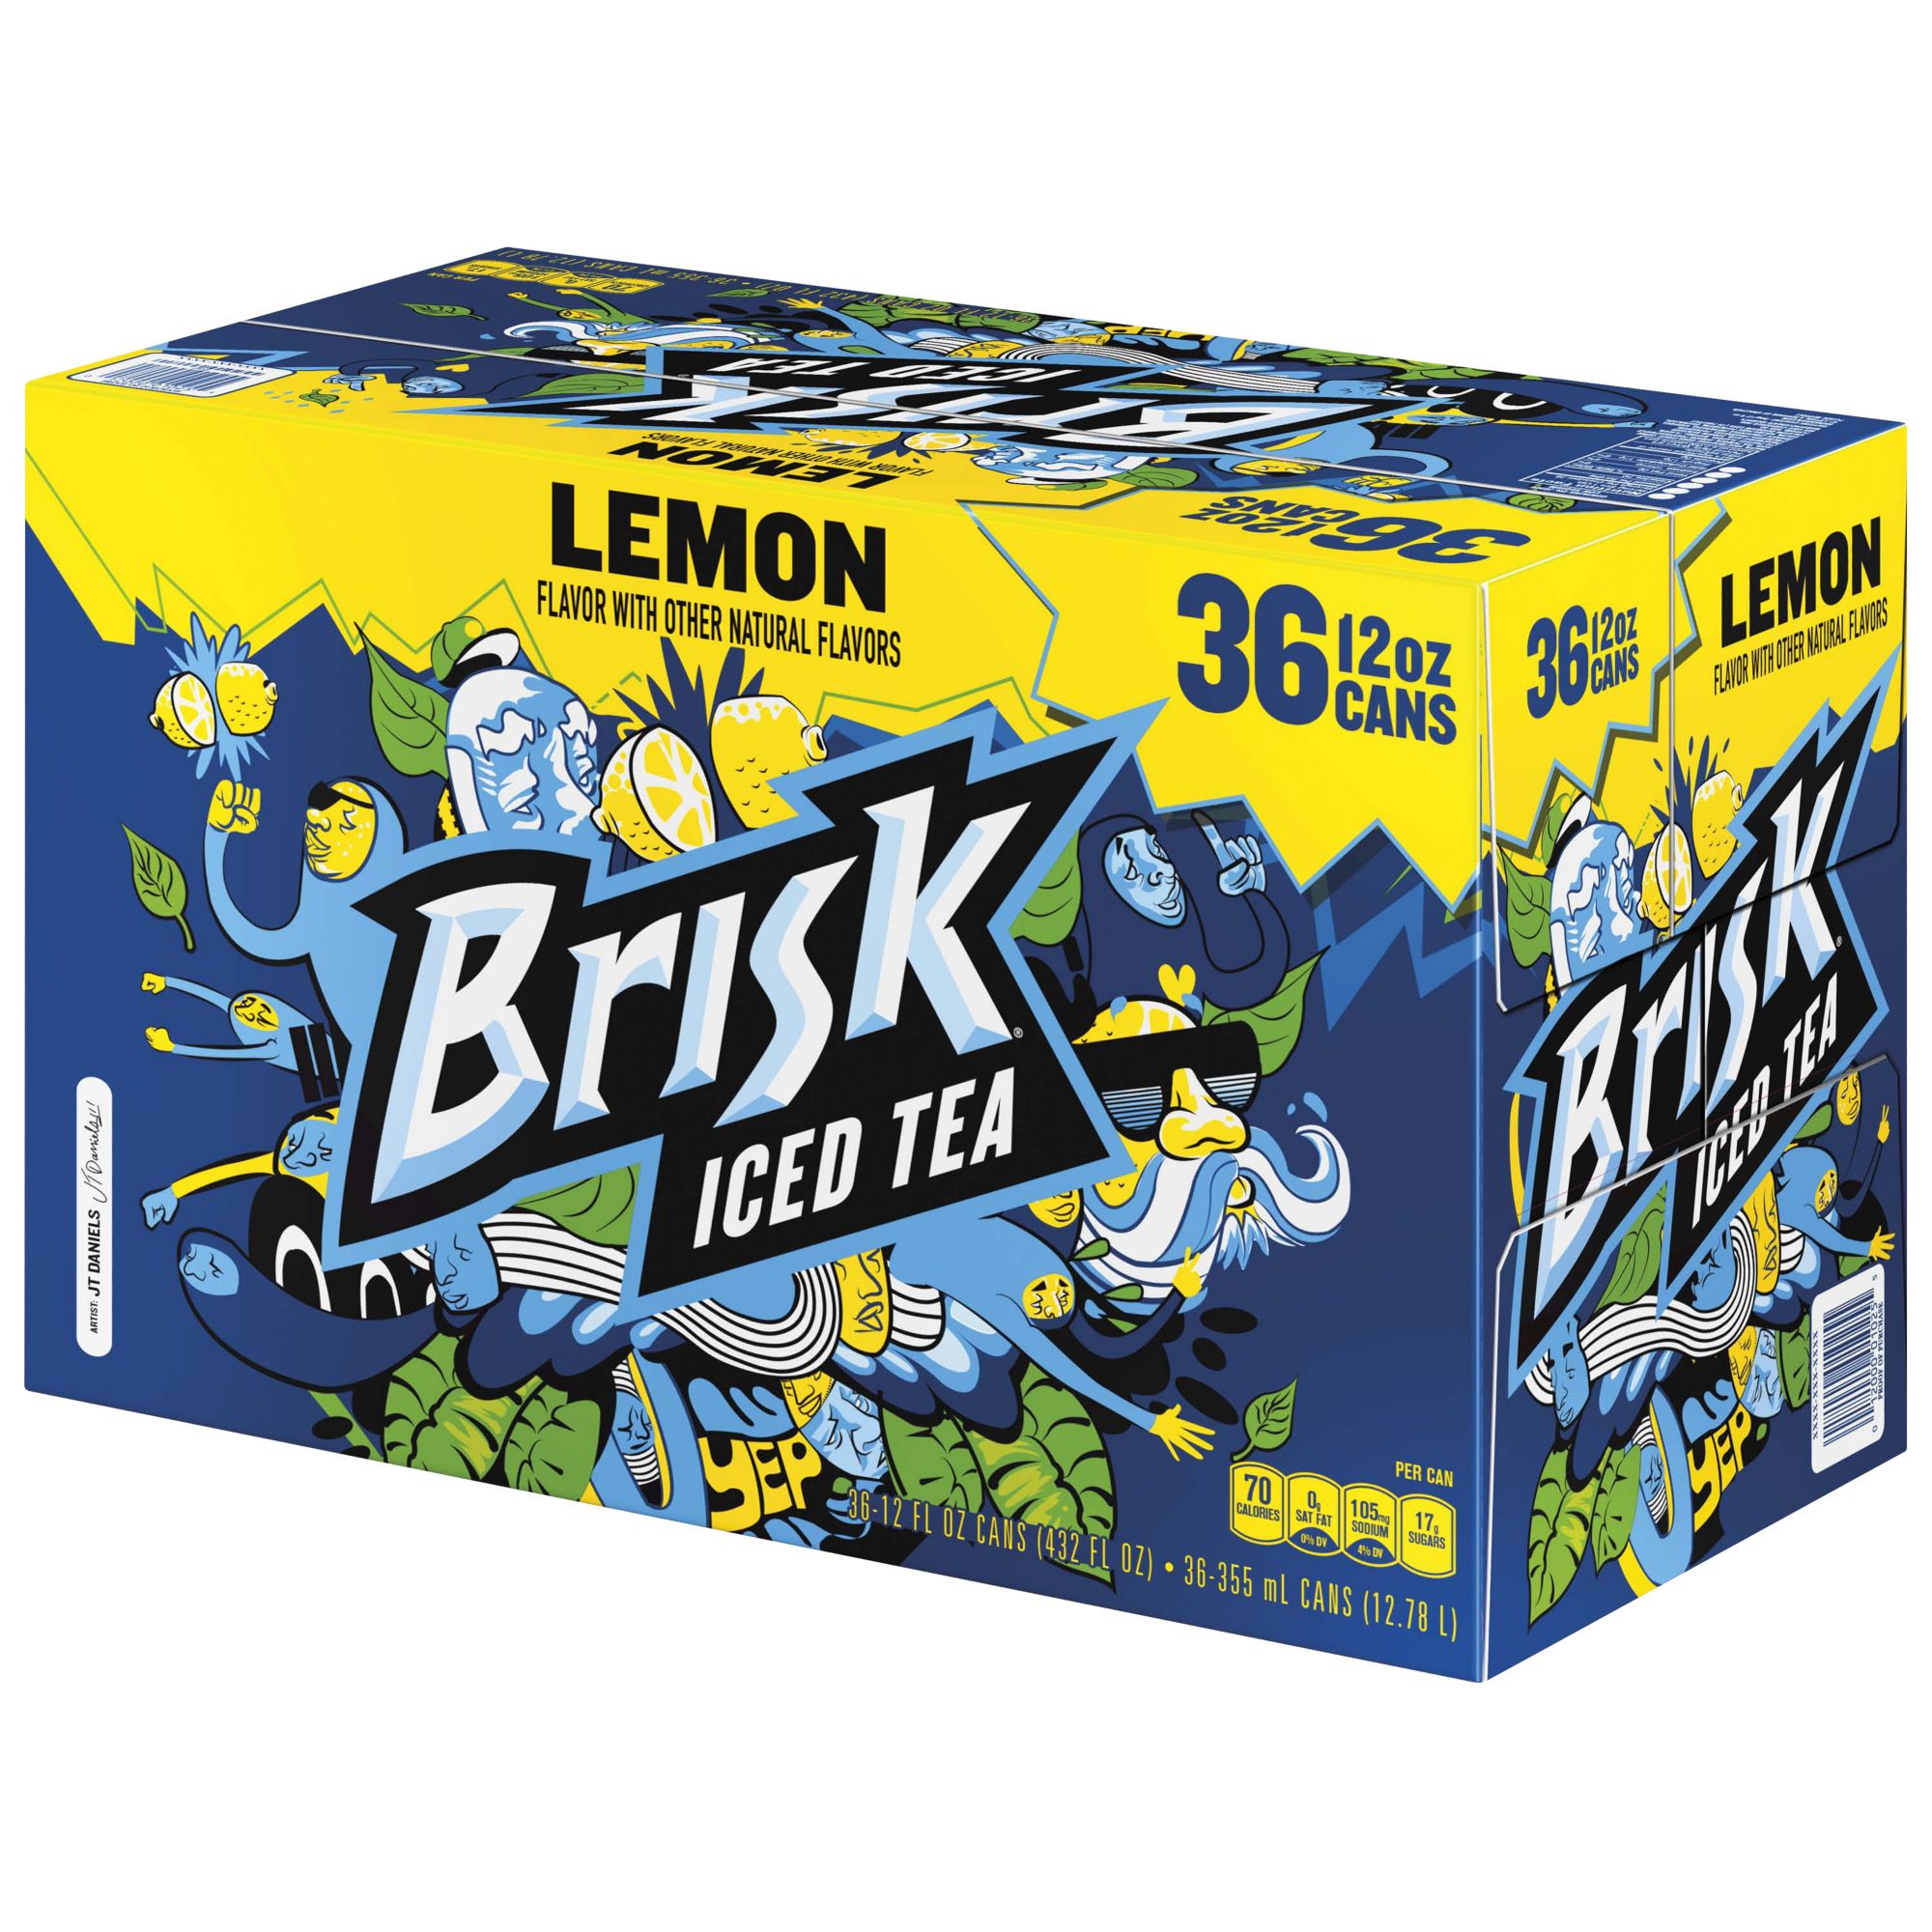 Brisk Lemon Iced Tea 12 pk Cans - Shop Tea at H-E-B